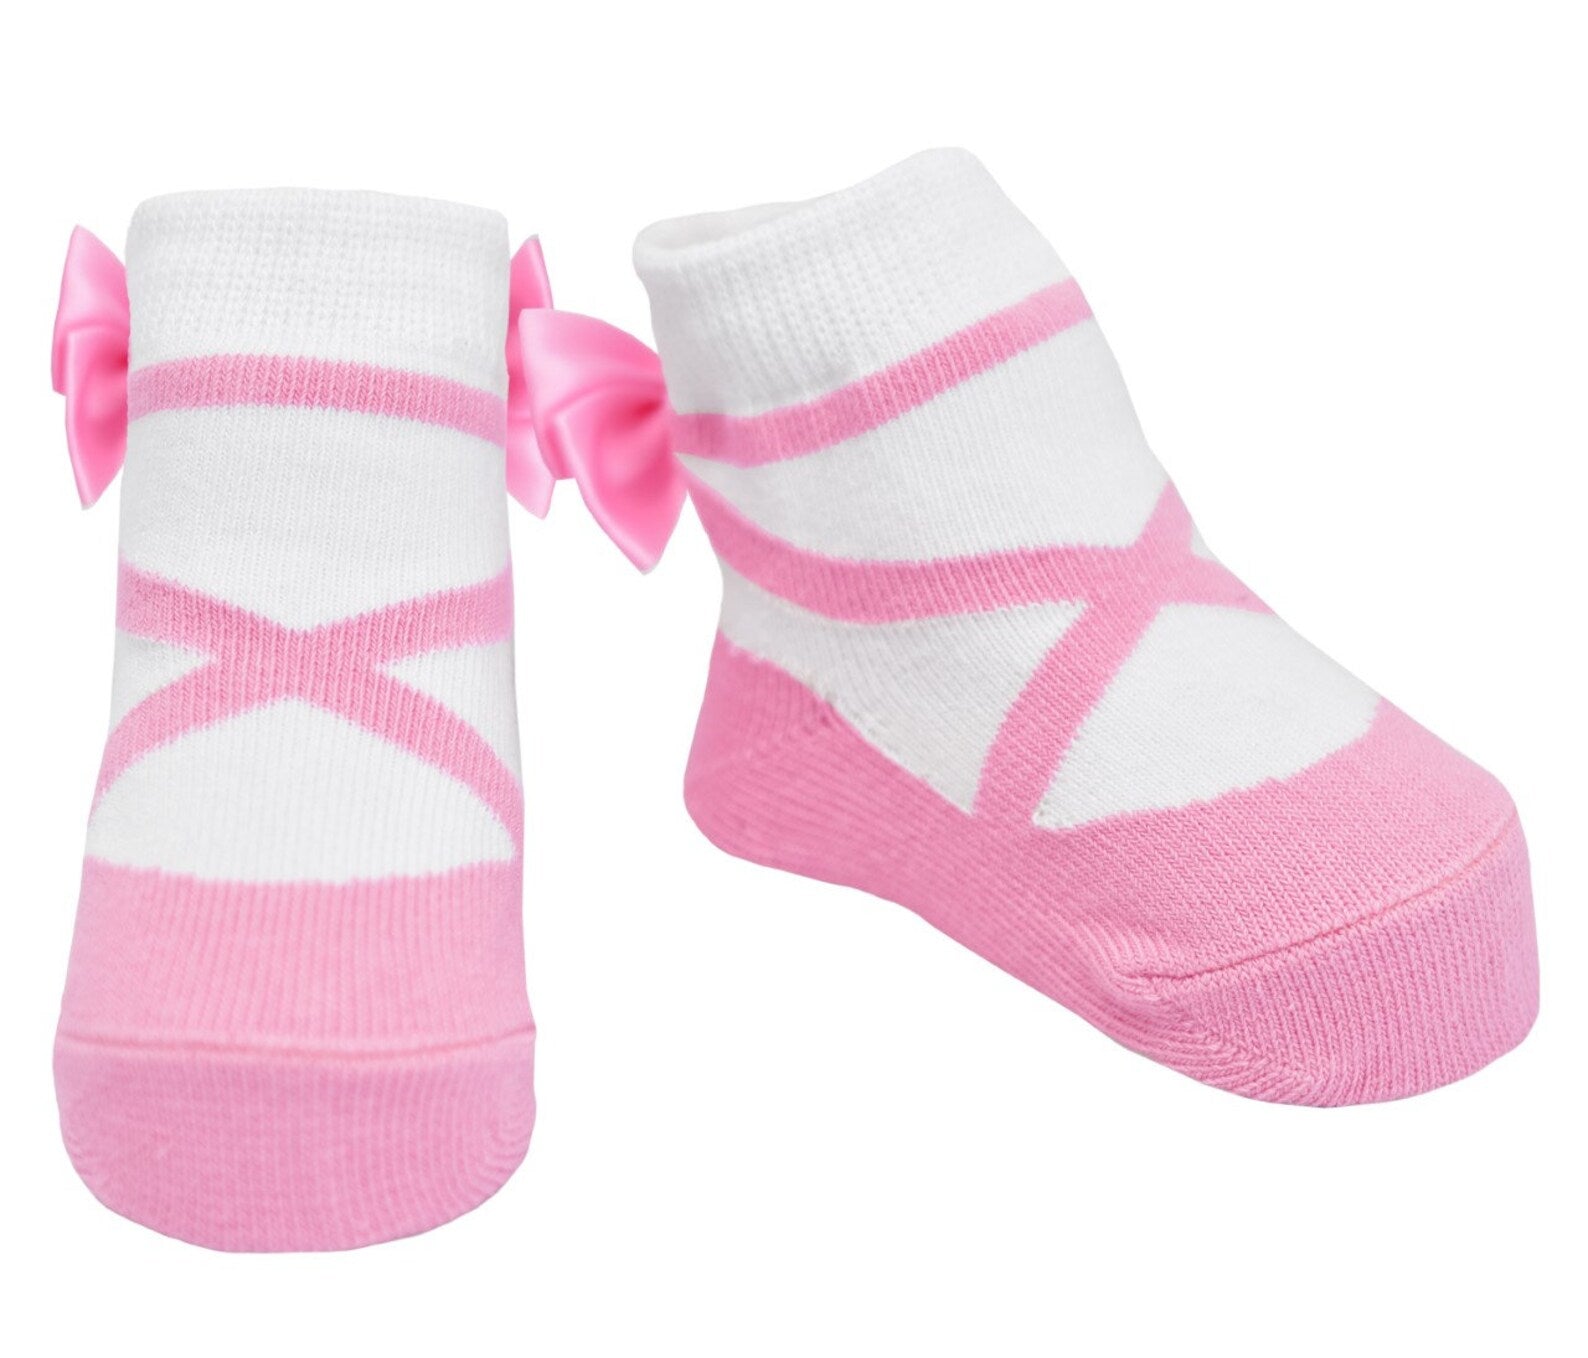 PINK ballerina shoe-design socks with satin bows and anti-slip